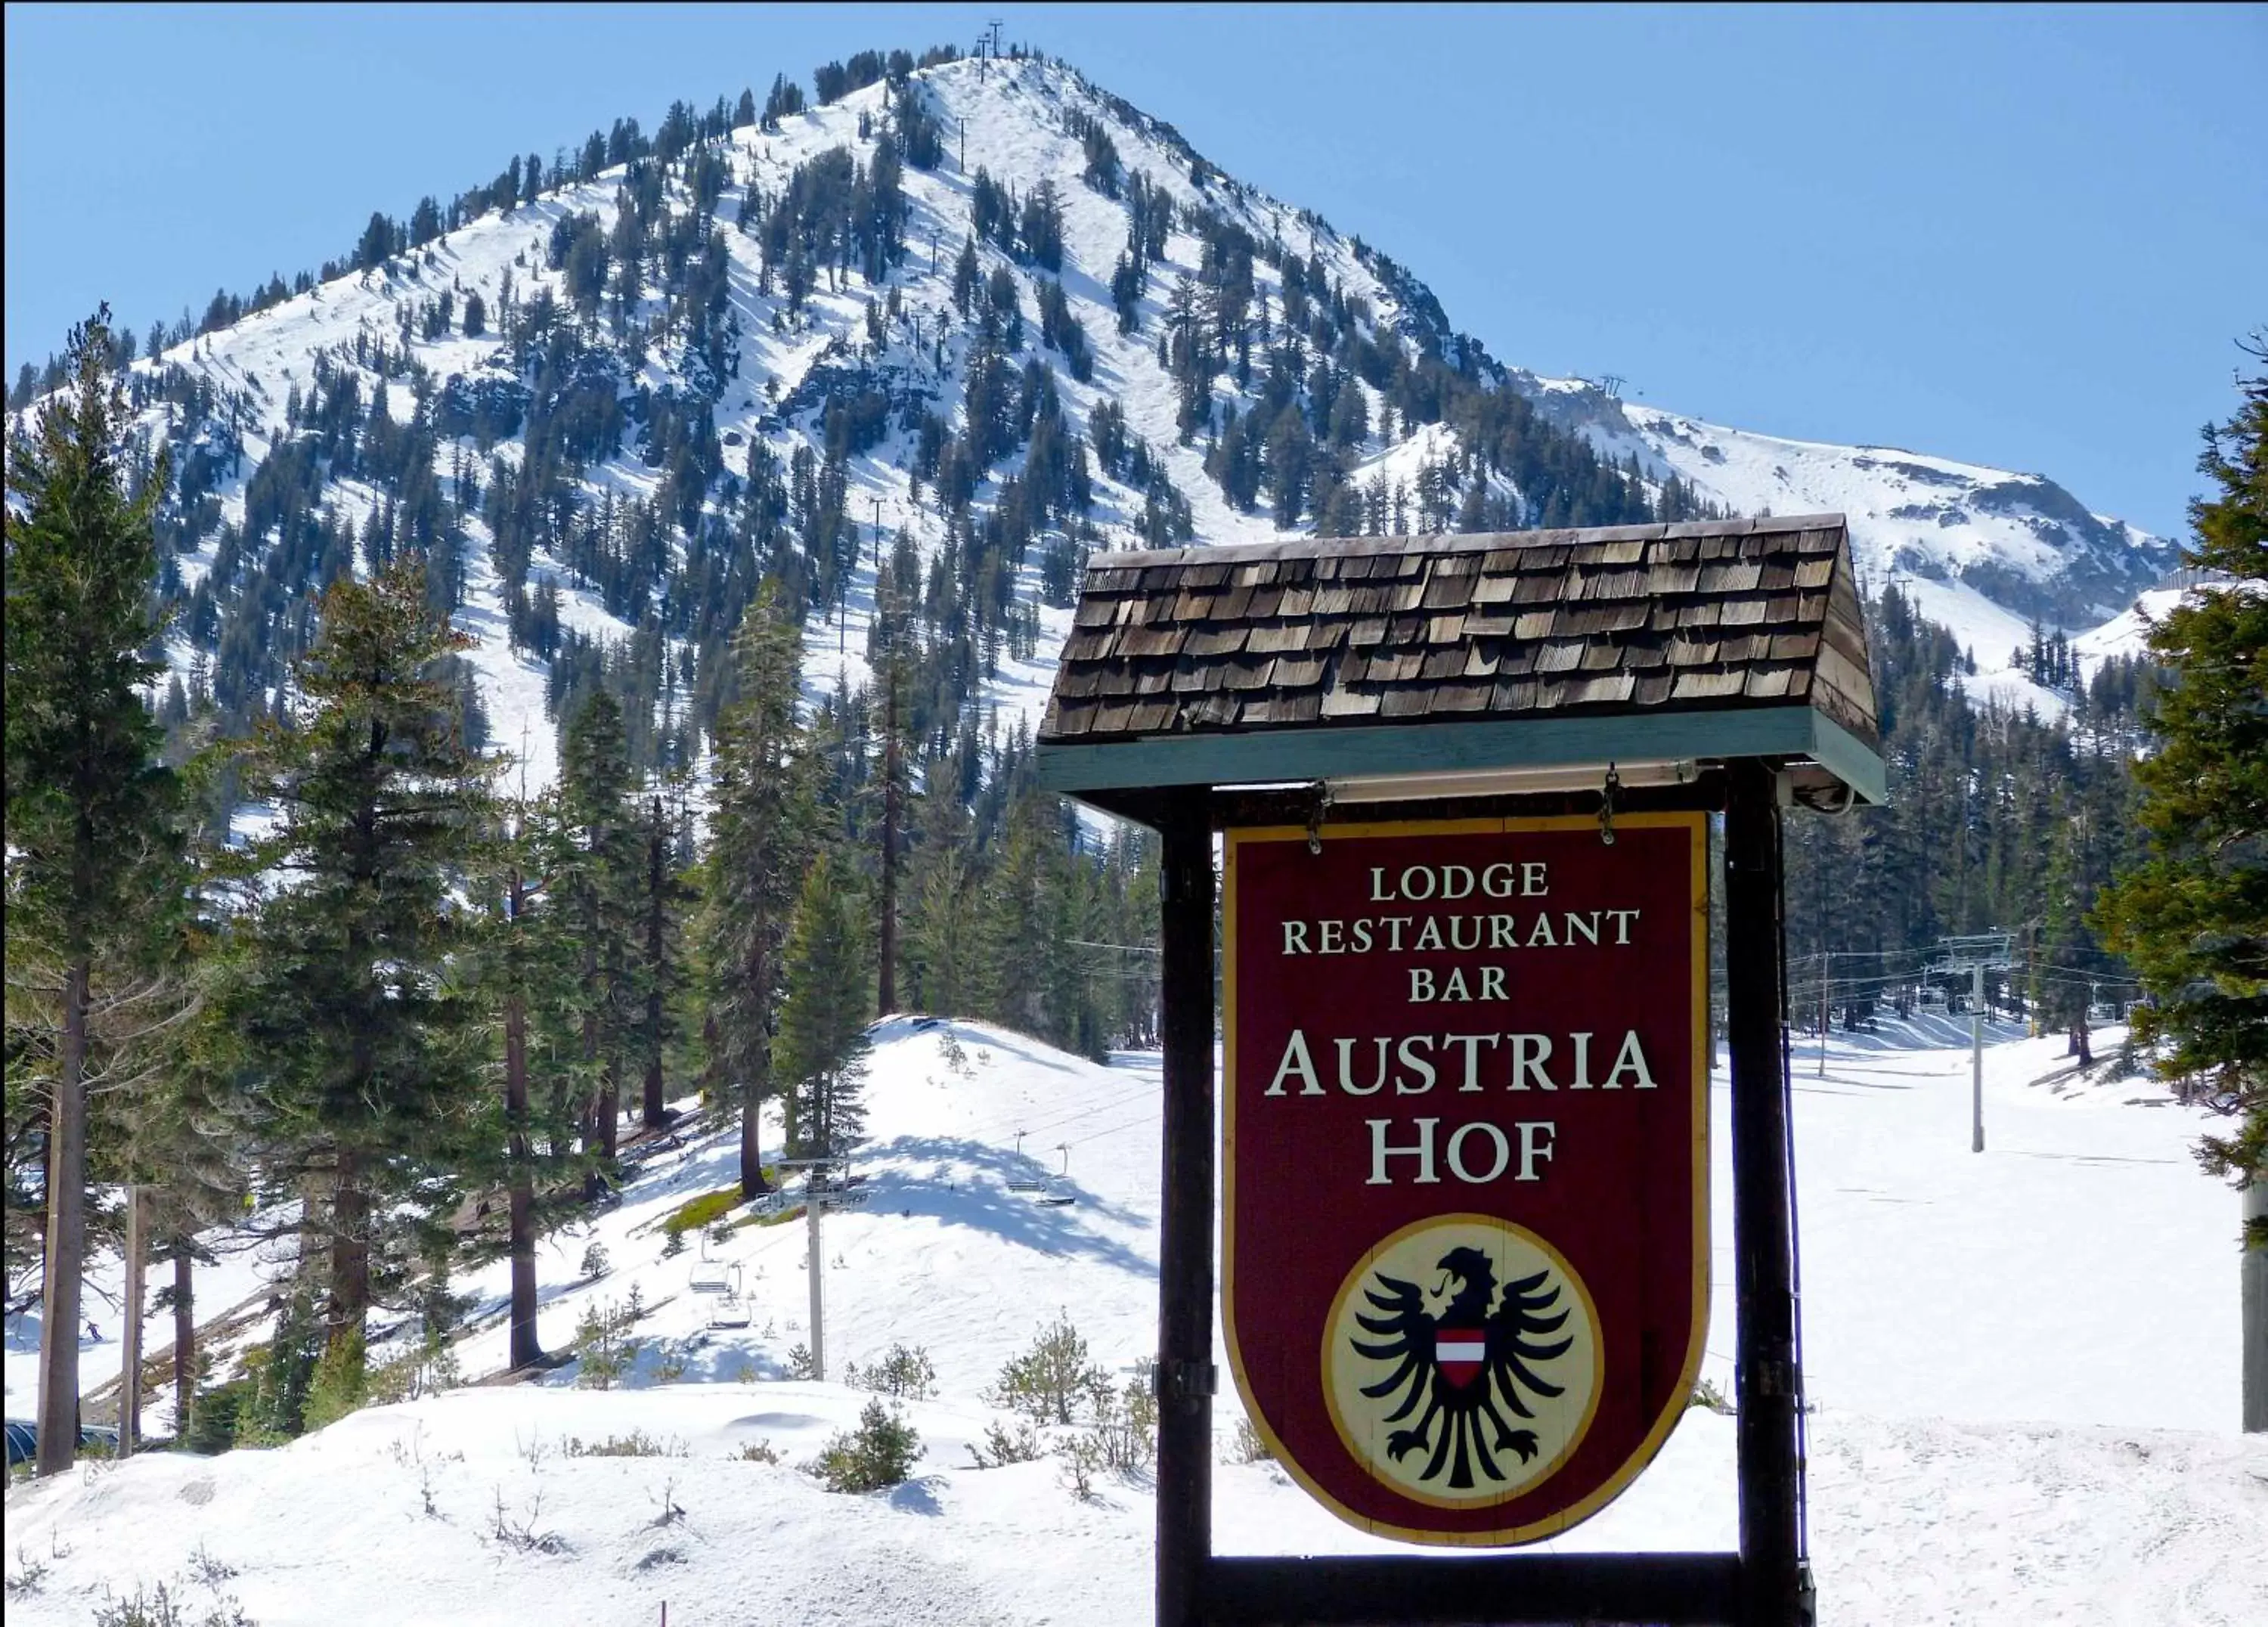 Area and facilities, Winter in Austria Hof Lodge